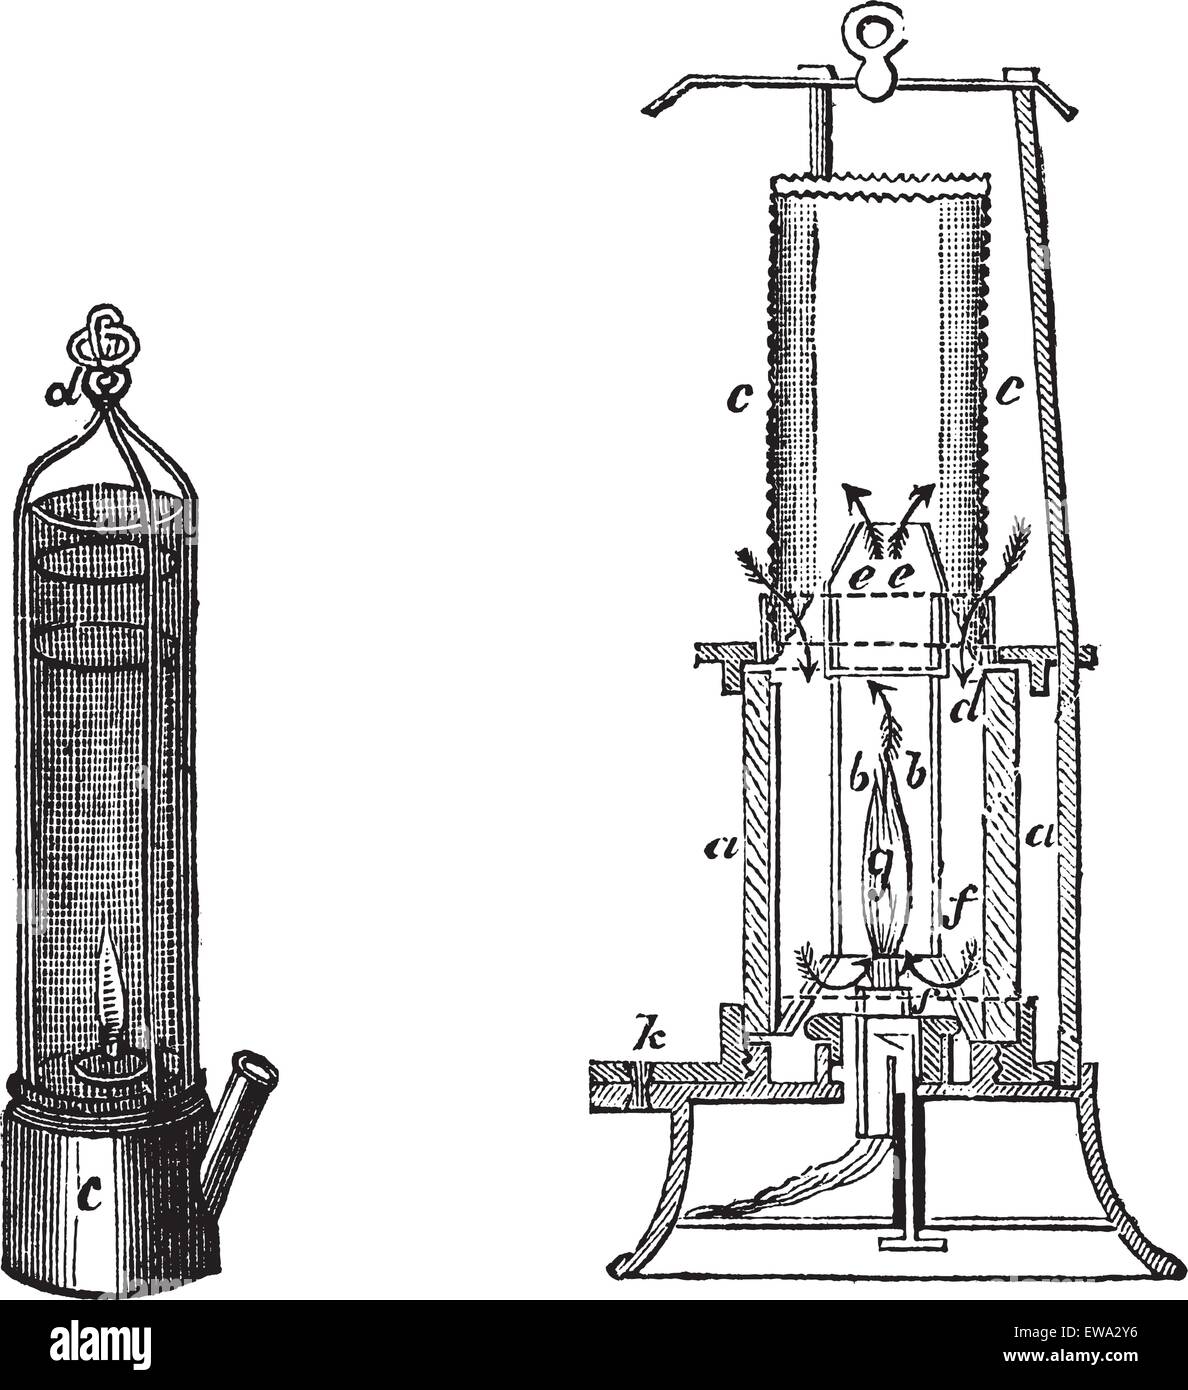 Fig 1.Davy safety lamp Fig 2. Safety lamp of Mackworth vintage engraving. Old engraved illustration of old-fashioned davy safety lamp and mackworth safety lamp, 1890s. Stock Vector